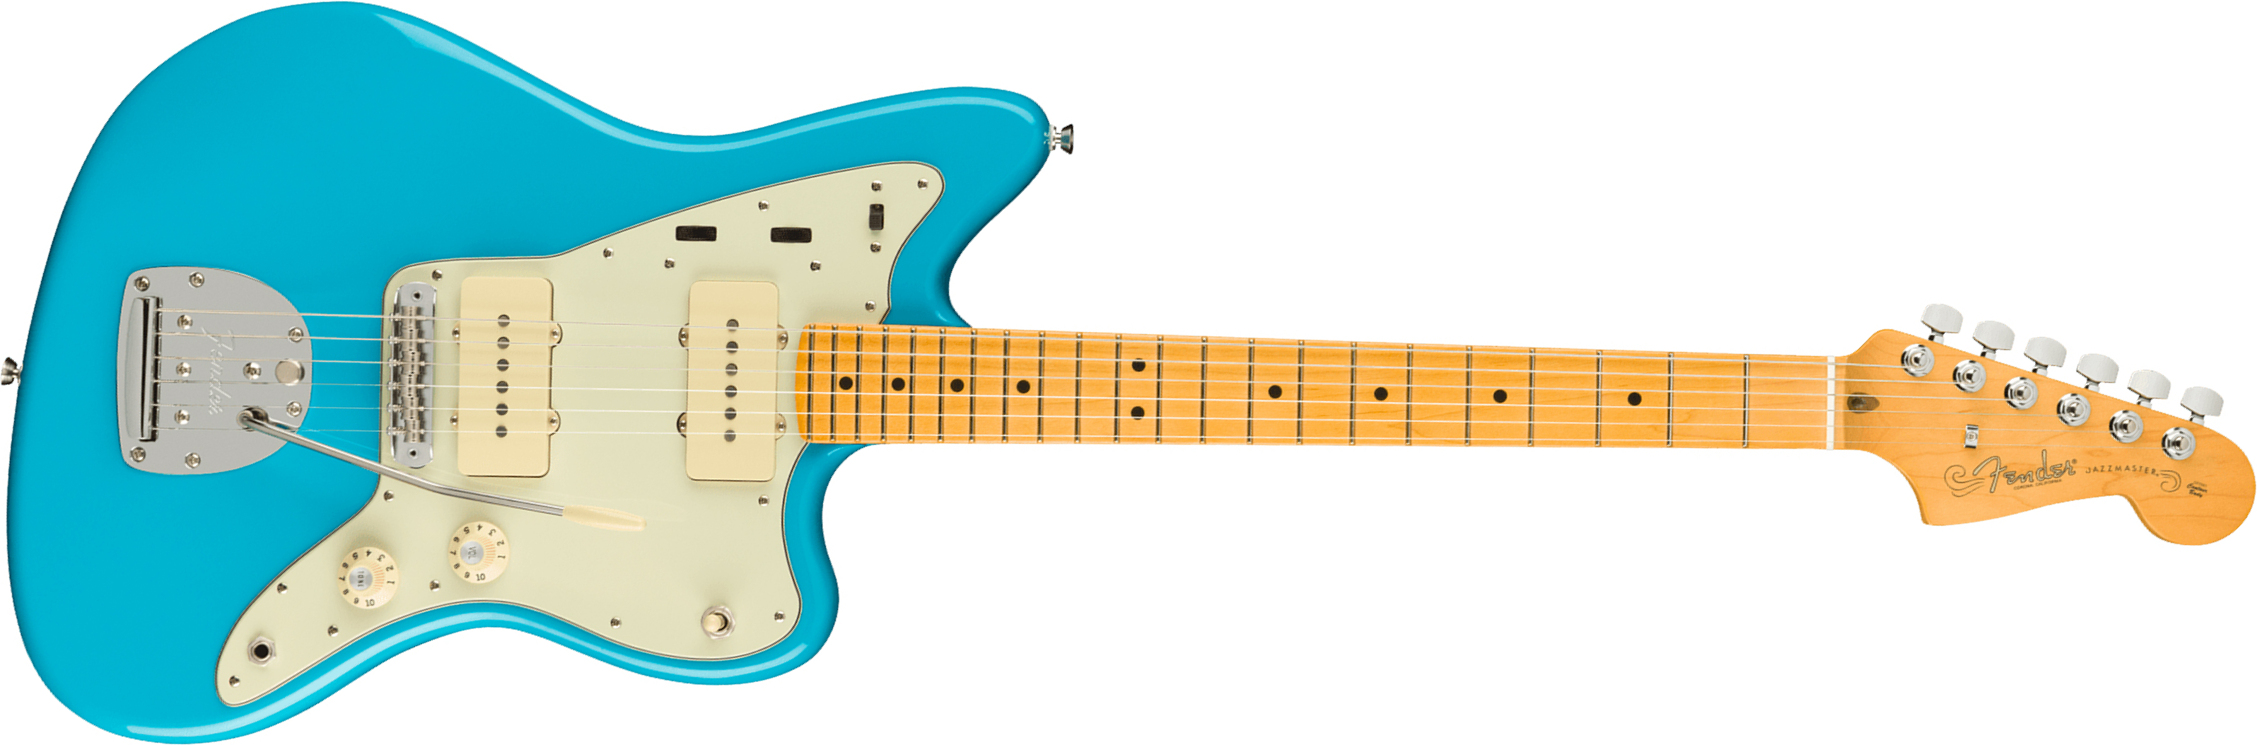 Fender Jazzmaster American Professional Ii Usa Rw - Miami Blue - Retro-rock elektrische gitaar - Main picture